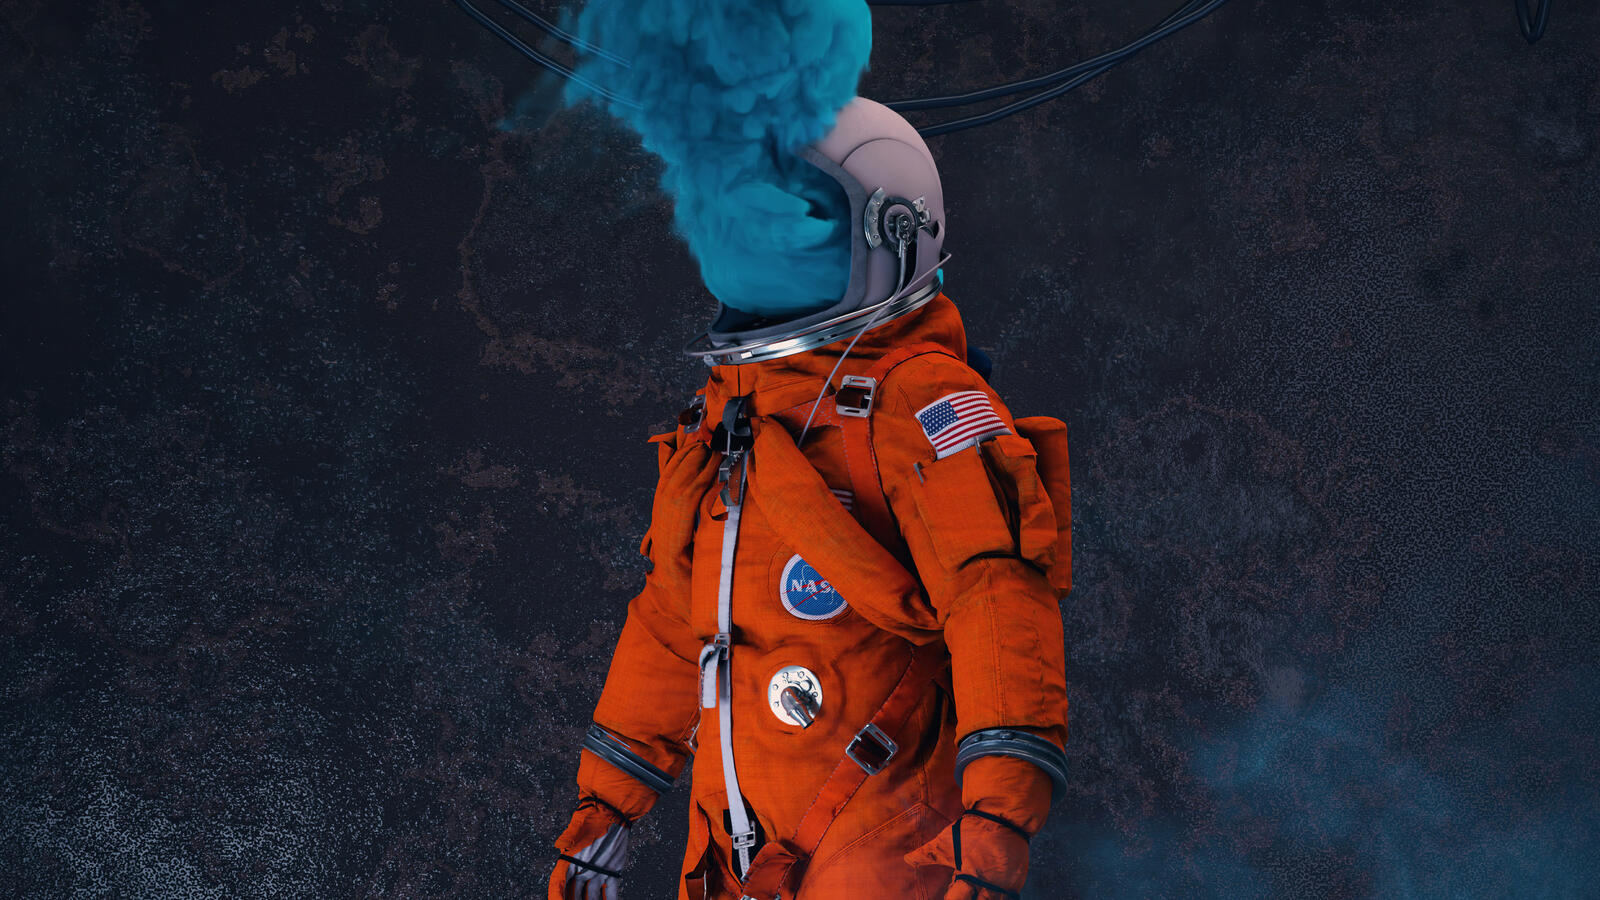 Wallpapers astronaut artist artwork on the desktop